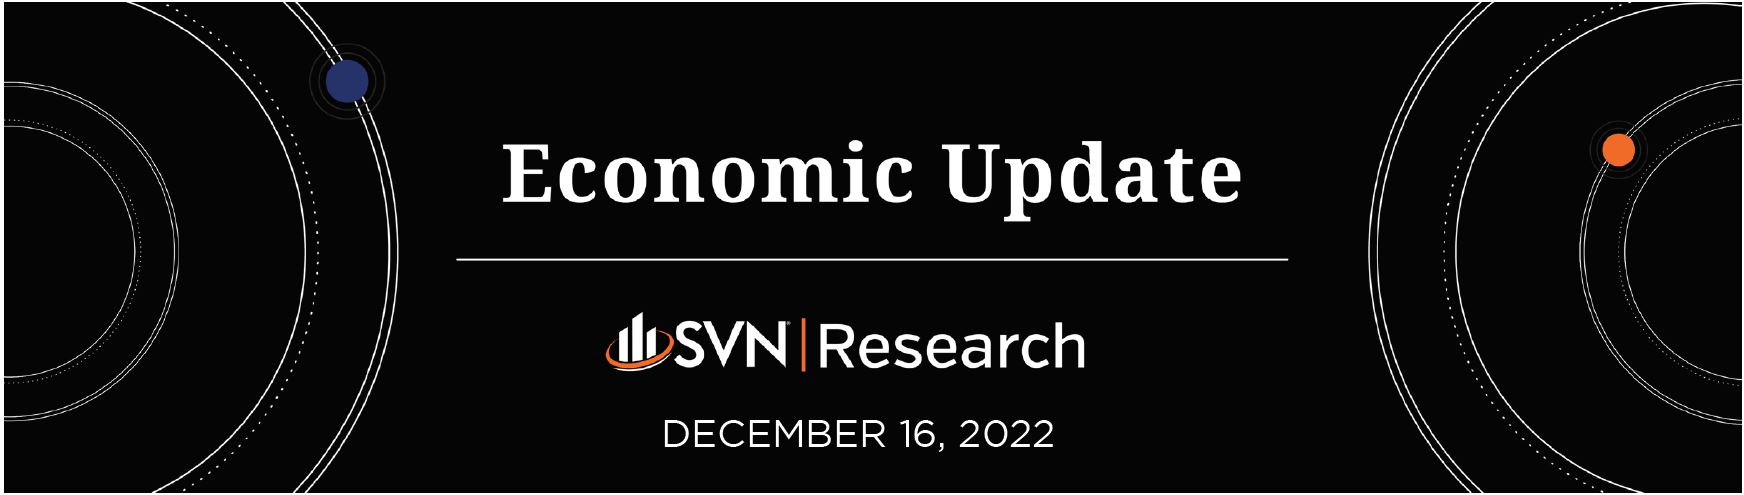 SVN | Research Economic Update 12.16.2022